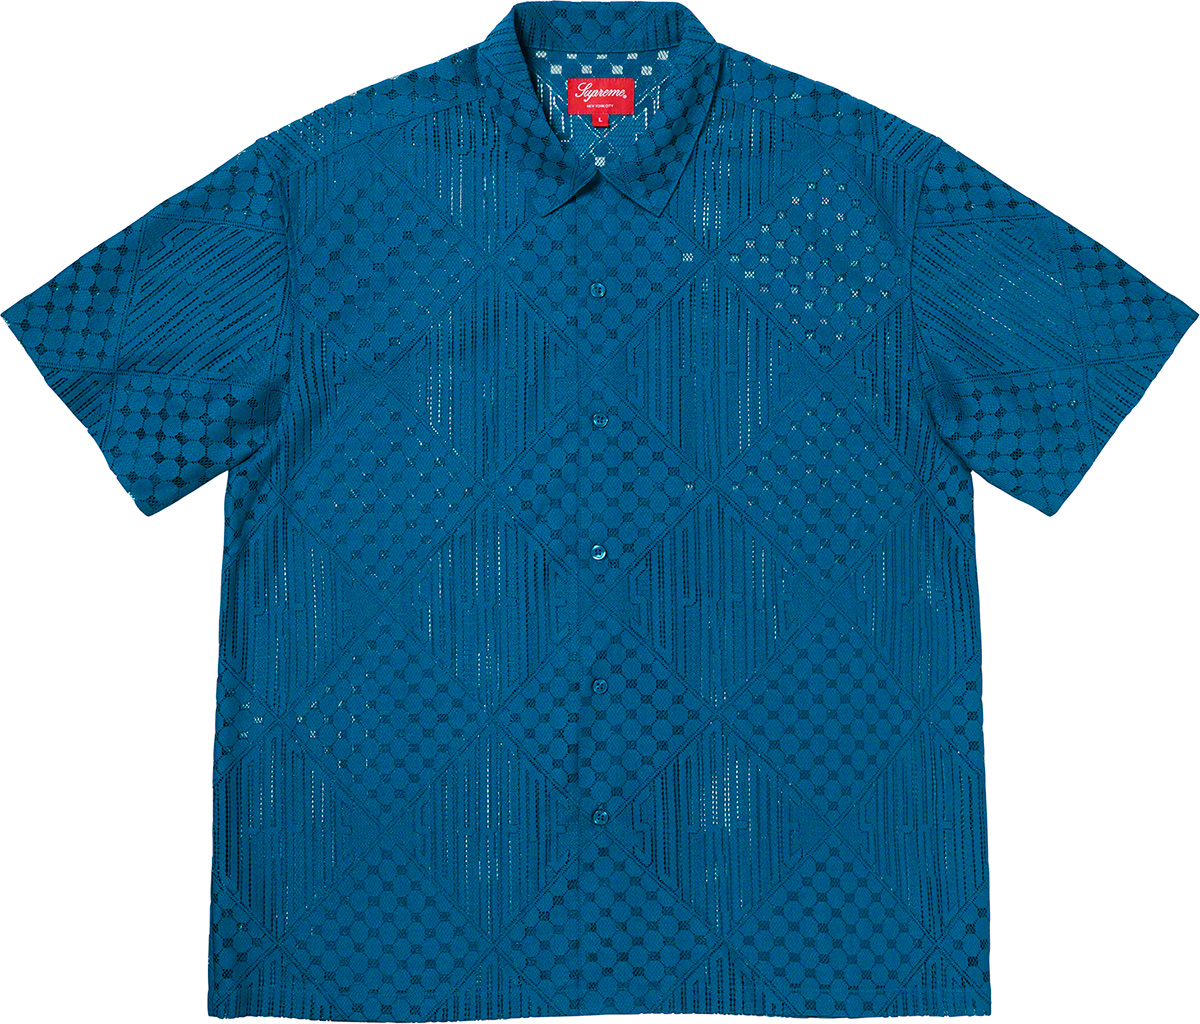 Supreme Liberty Lace S/S Shirt Lサイズ www.krzysztofbialy.com